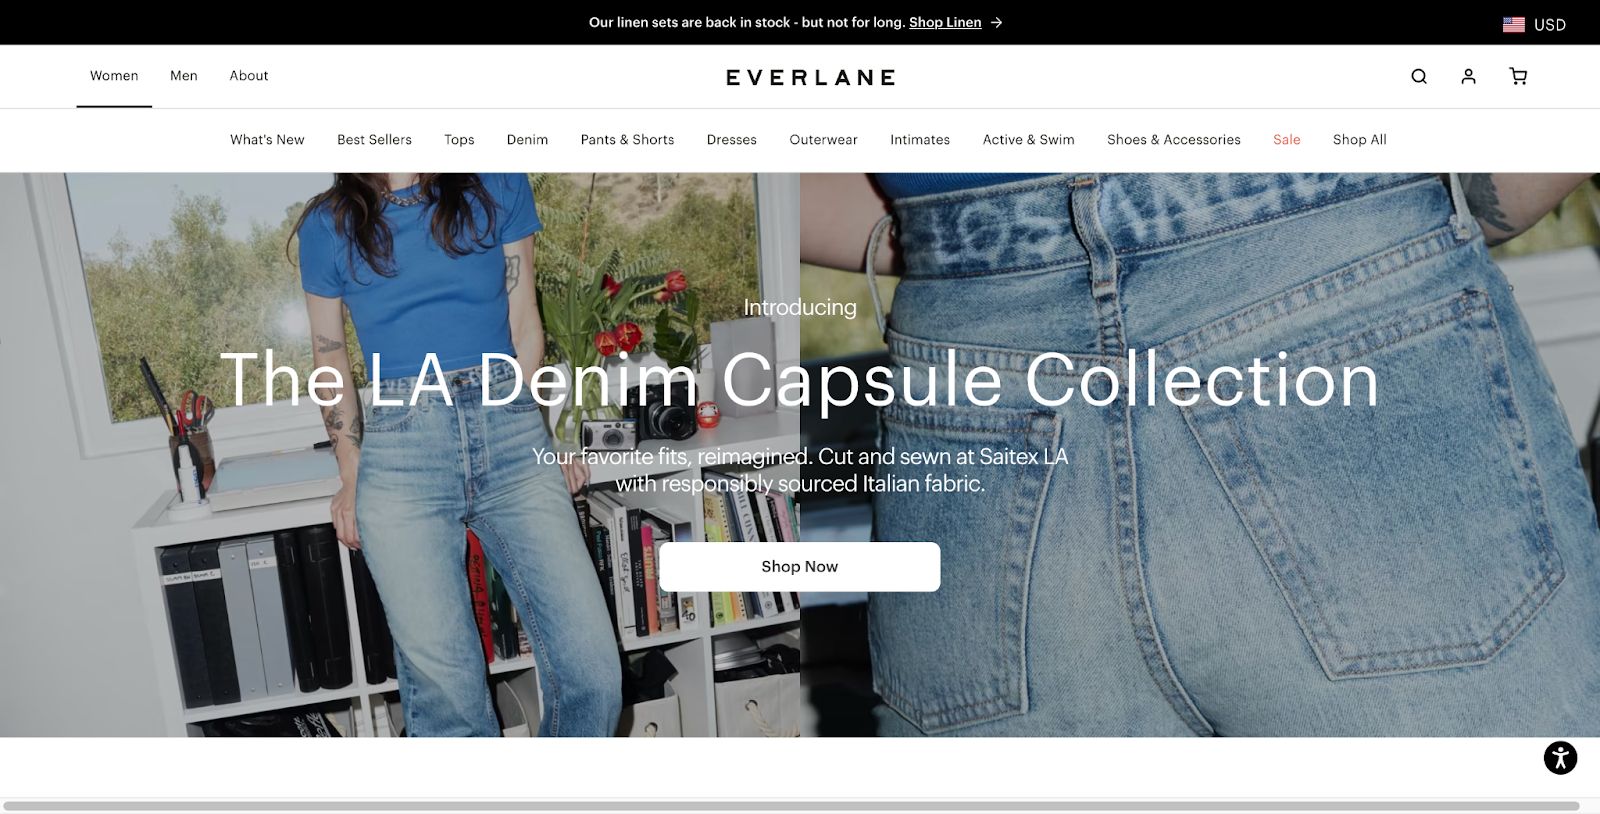 Homepage of Everlane fashion ecommerce website.